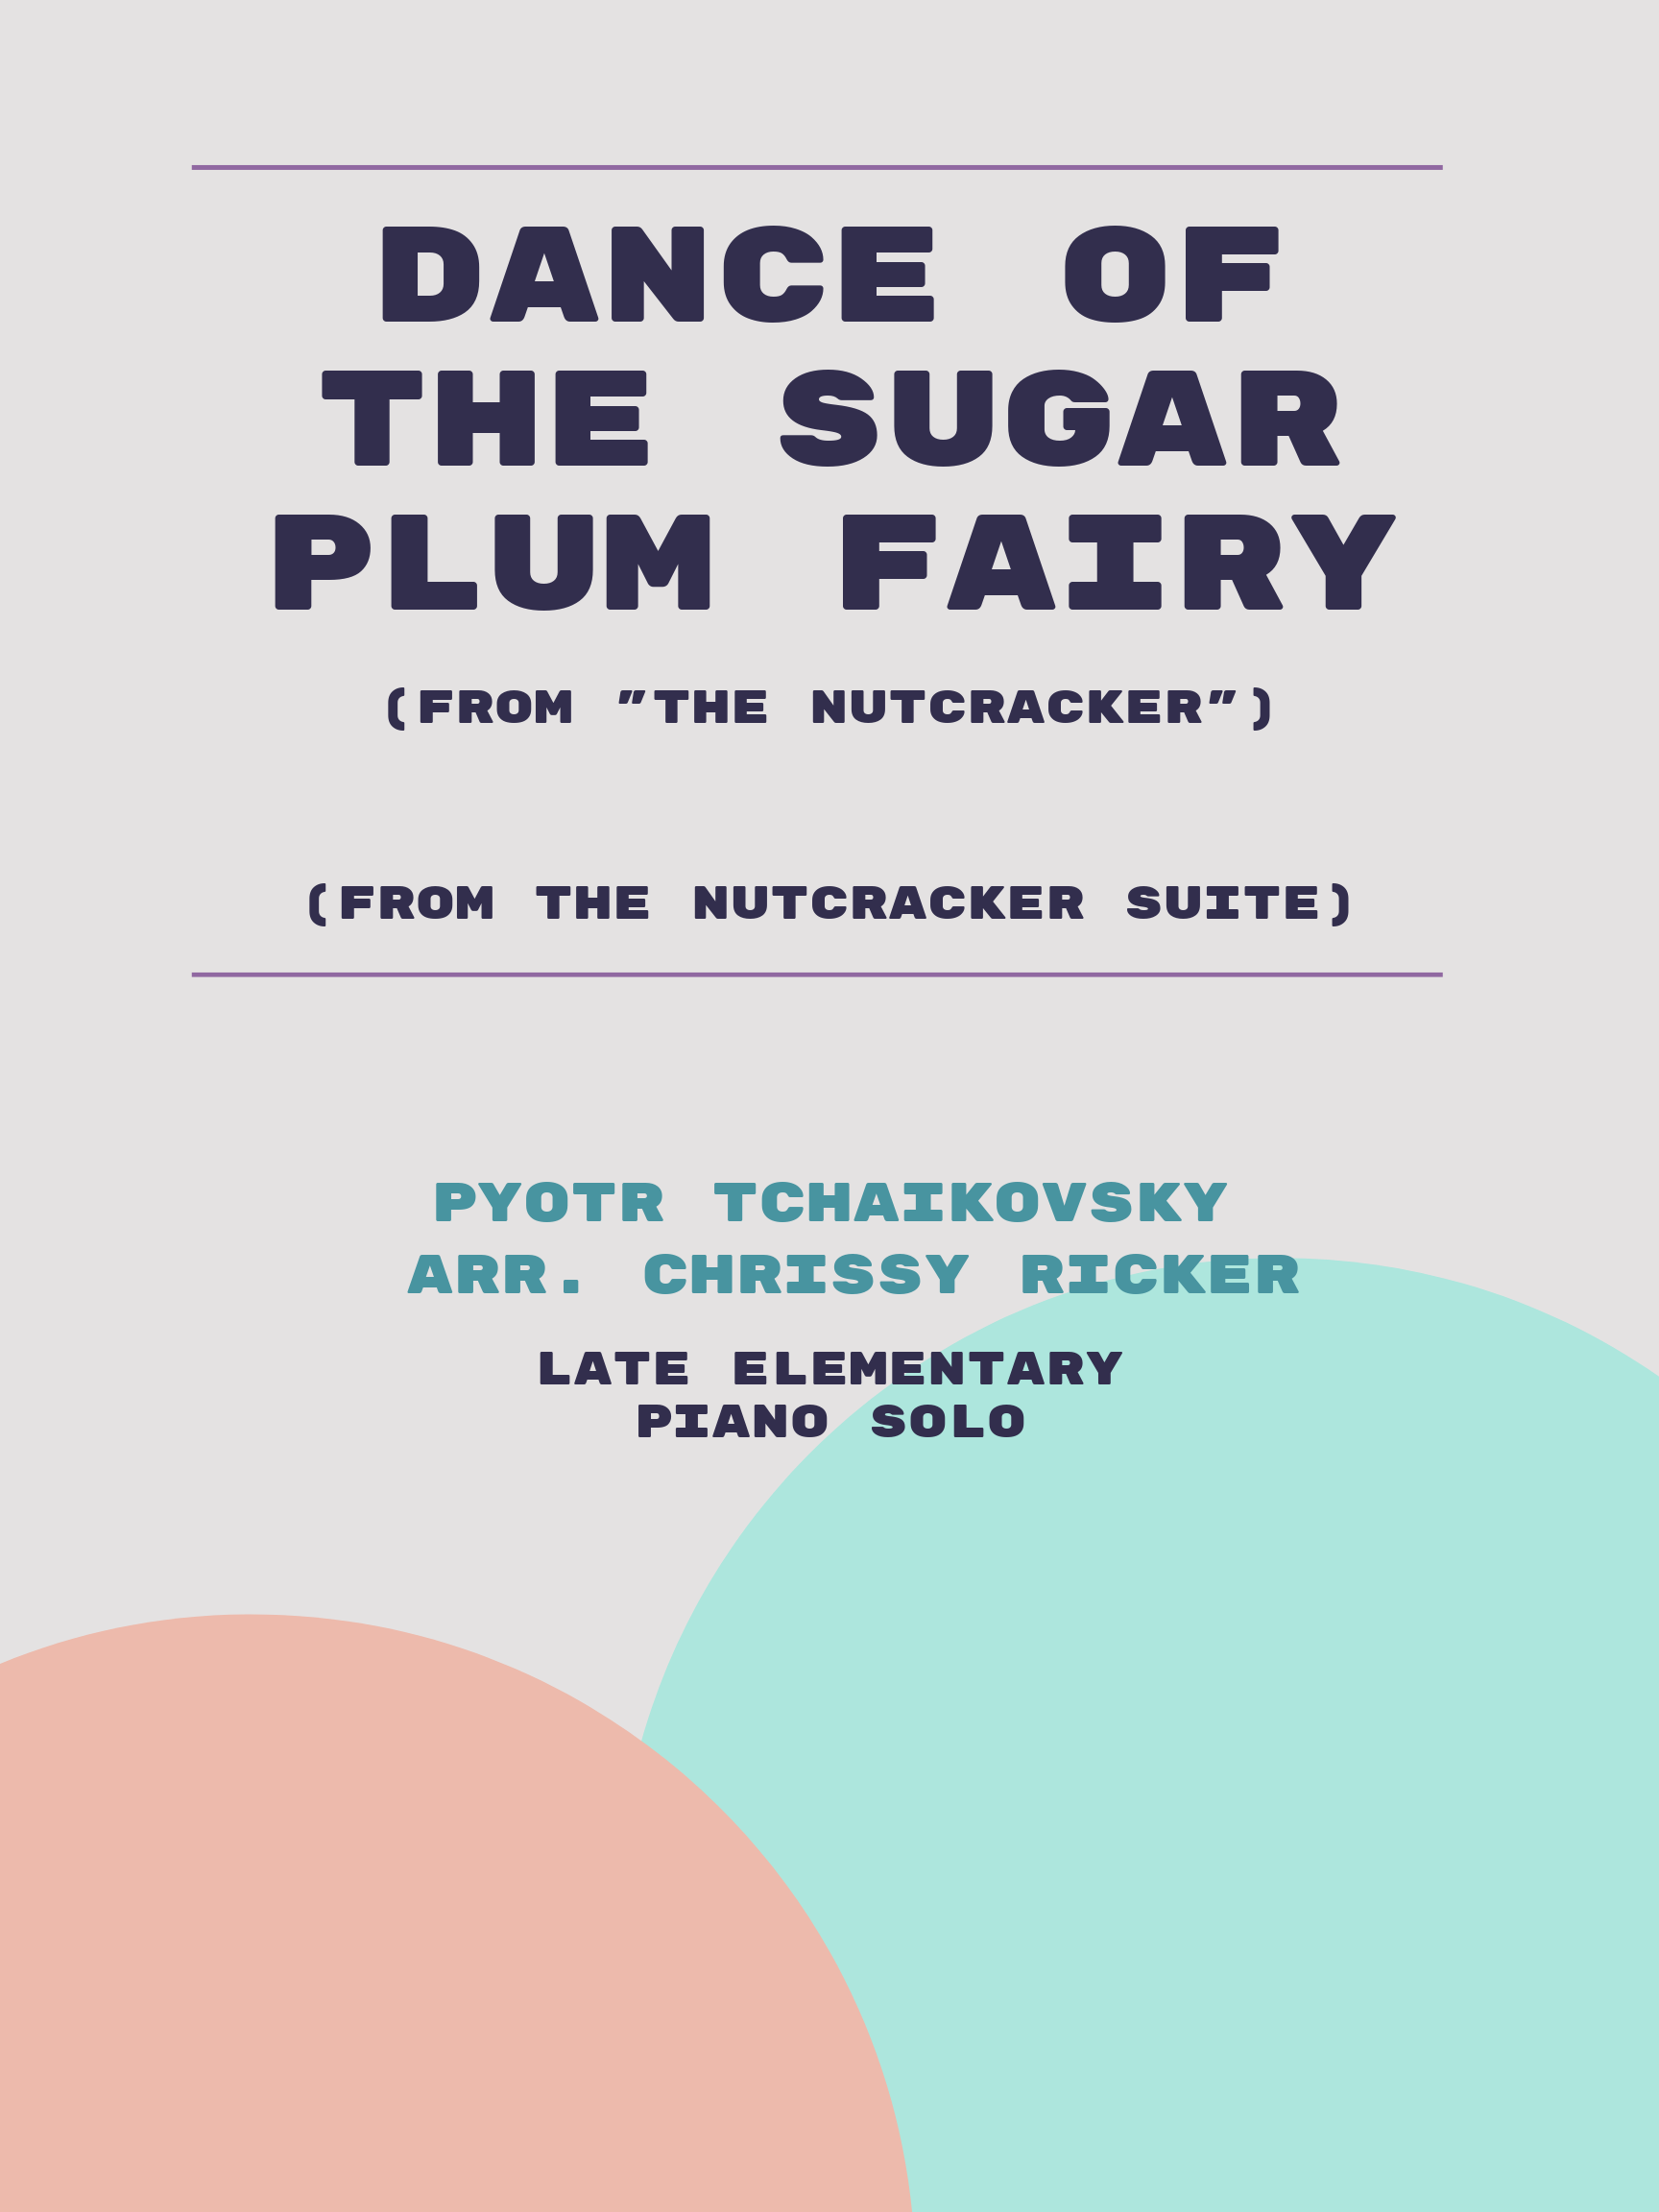 Dance of the Sugar Plum Fairy by Pyotr Tchaikovsky